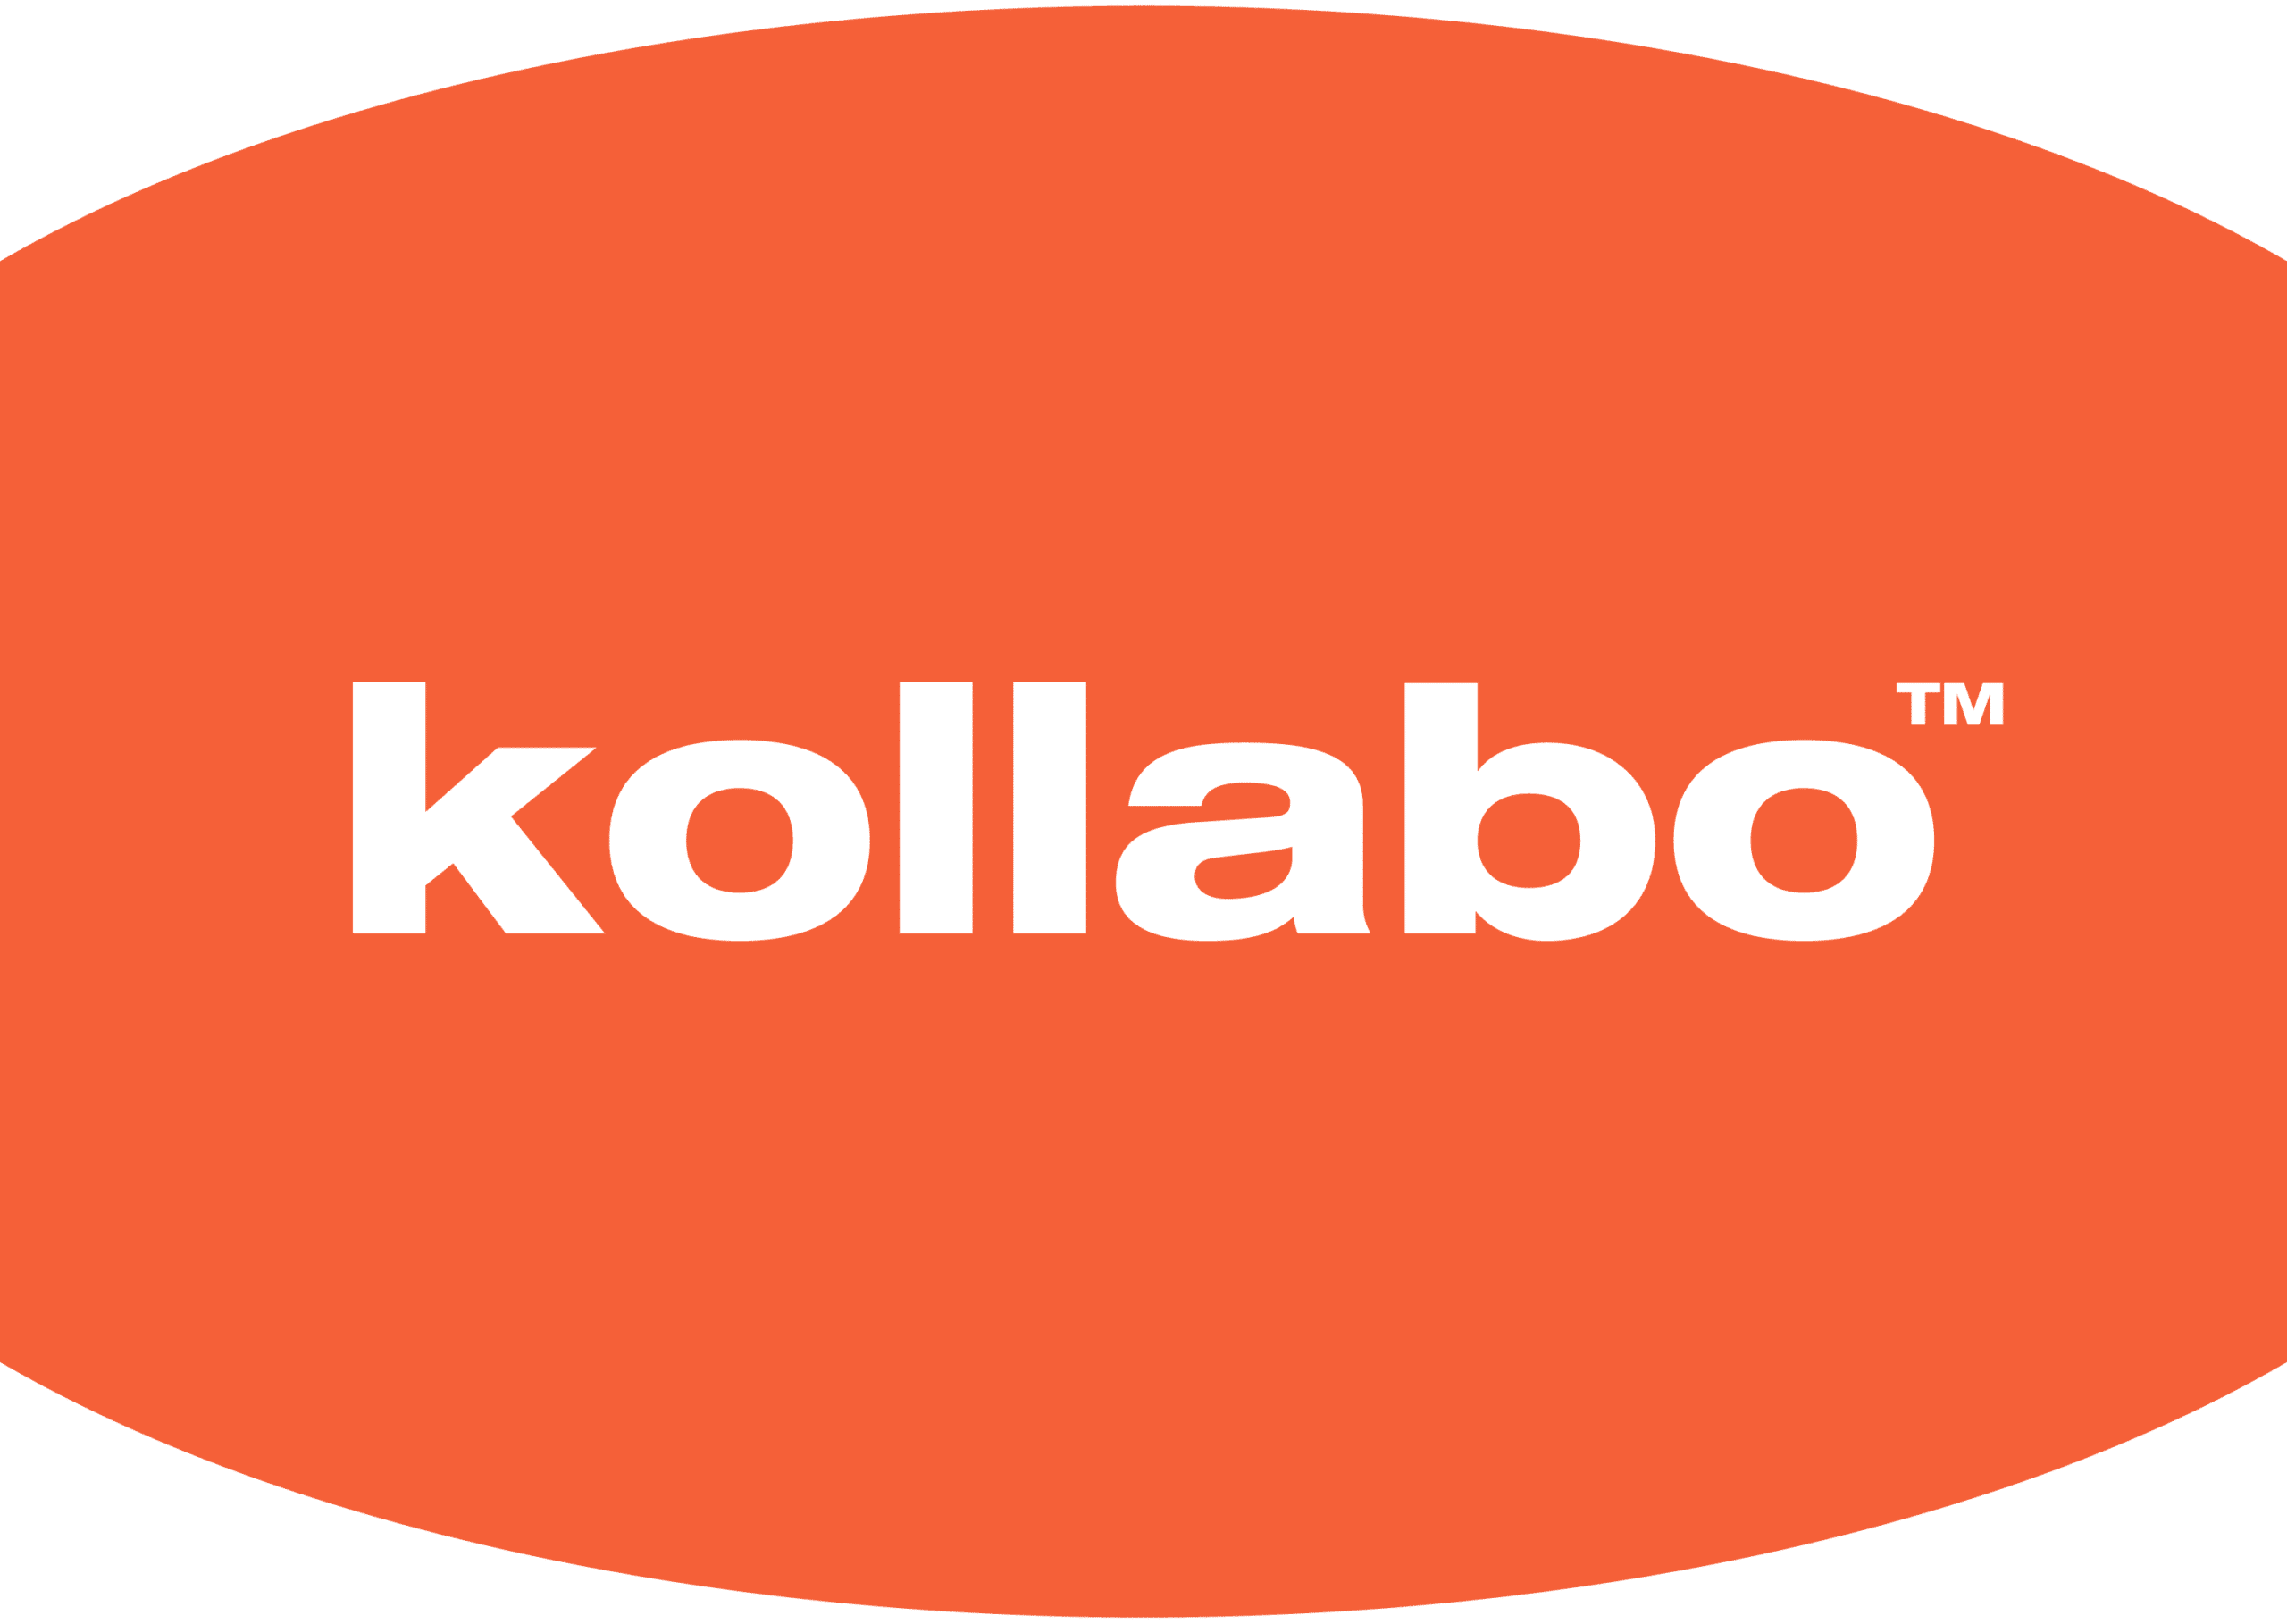 The logo for kollabo featuring handwerker on an orange circle.